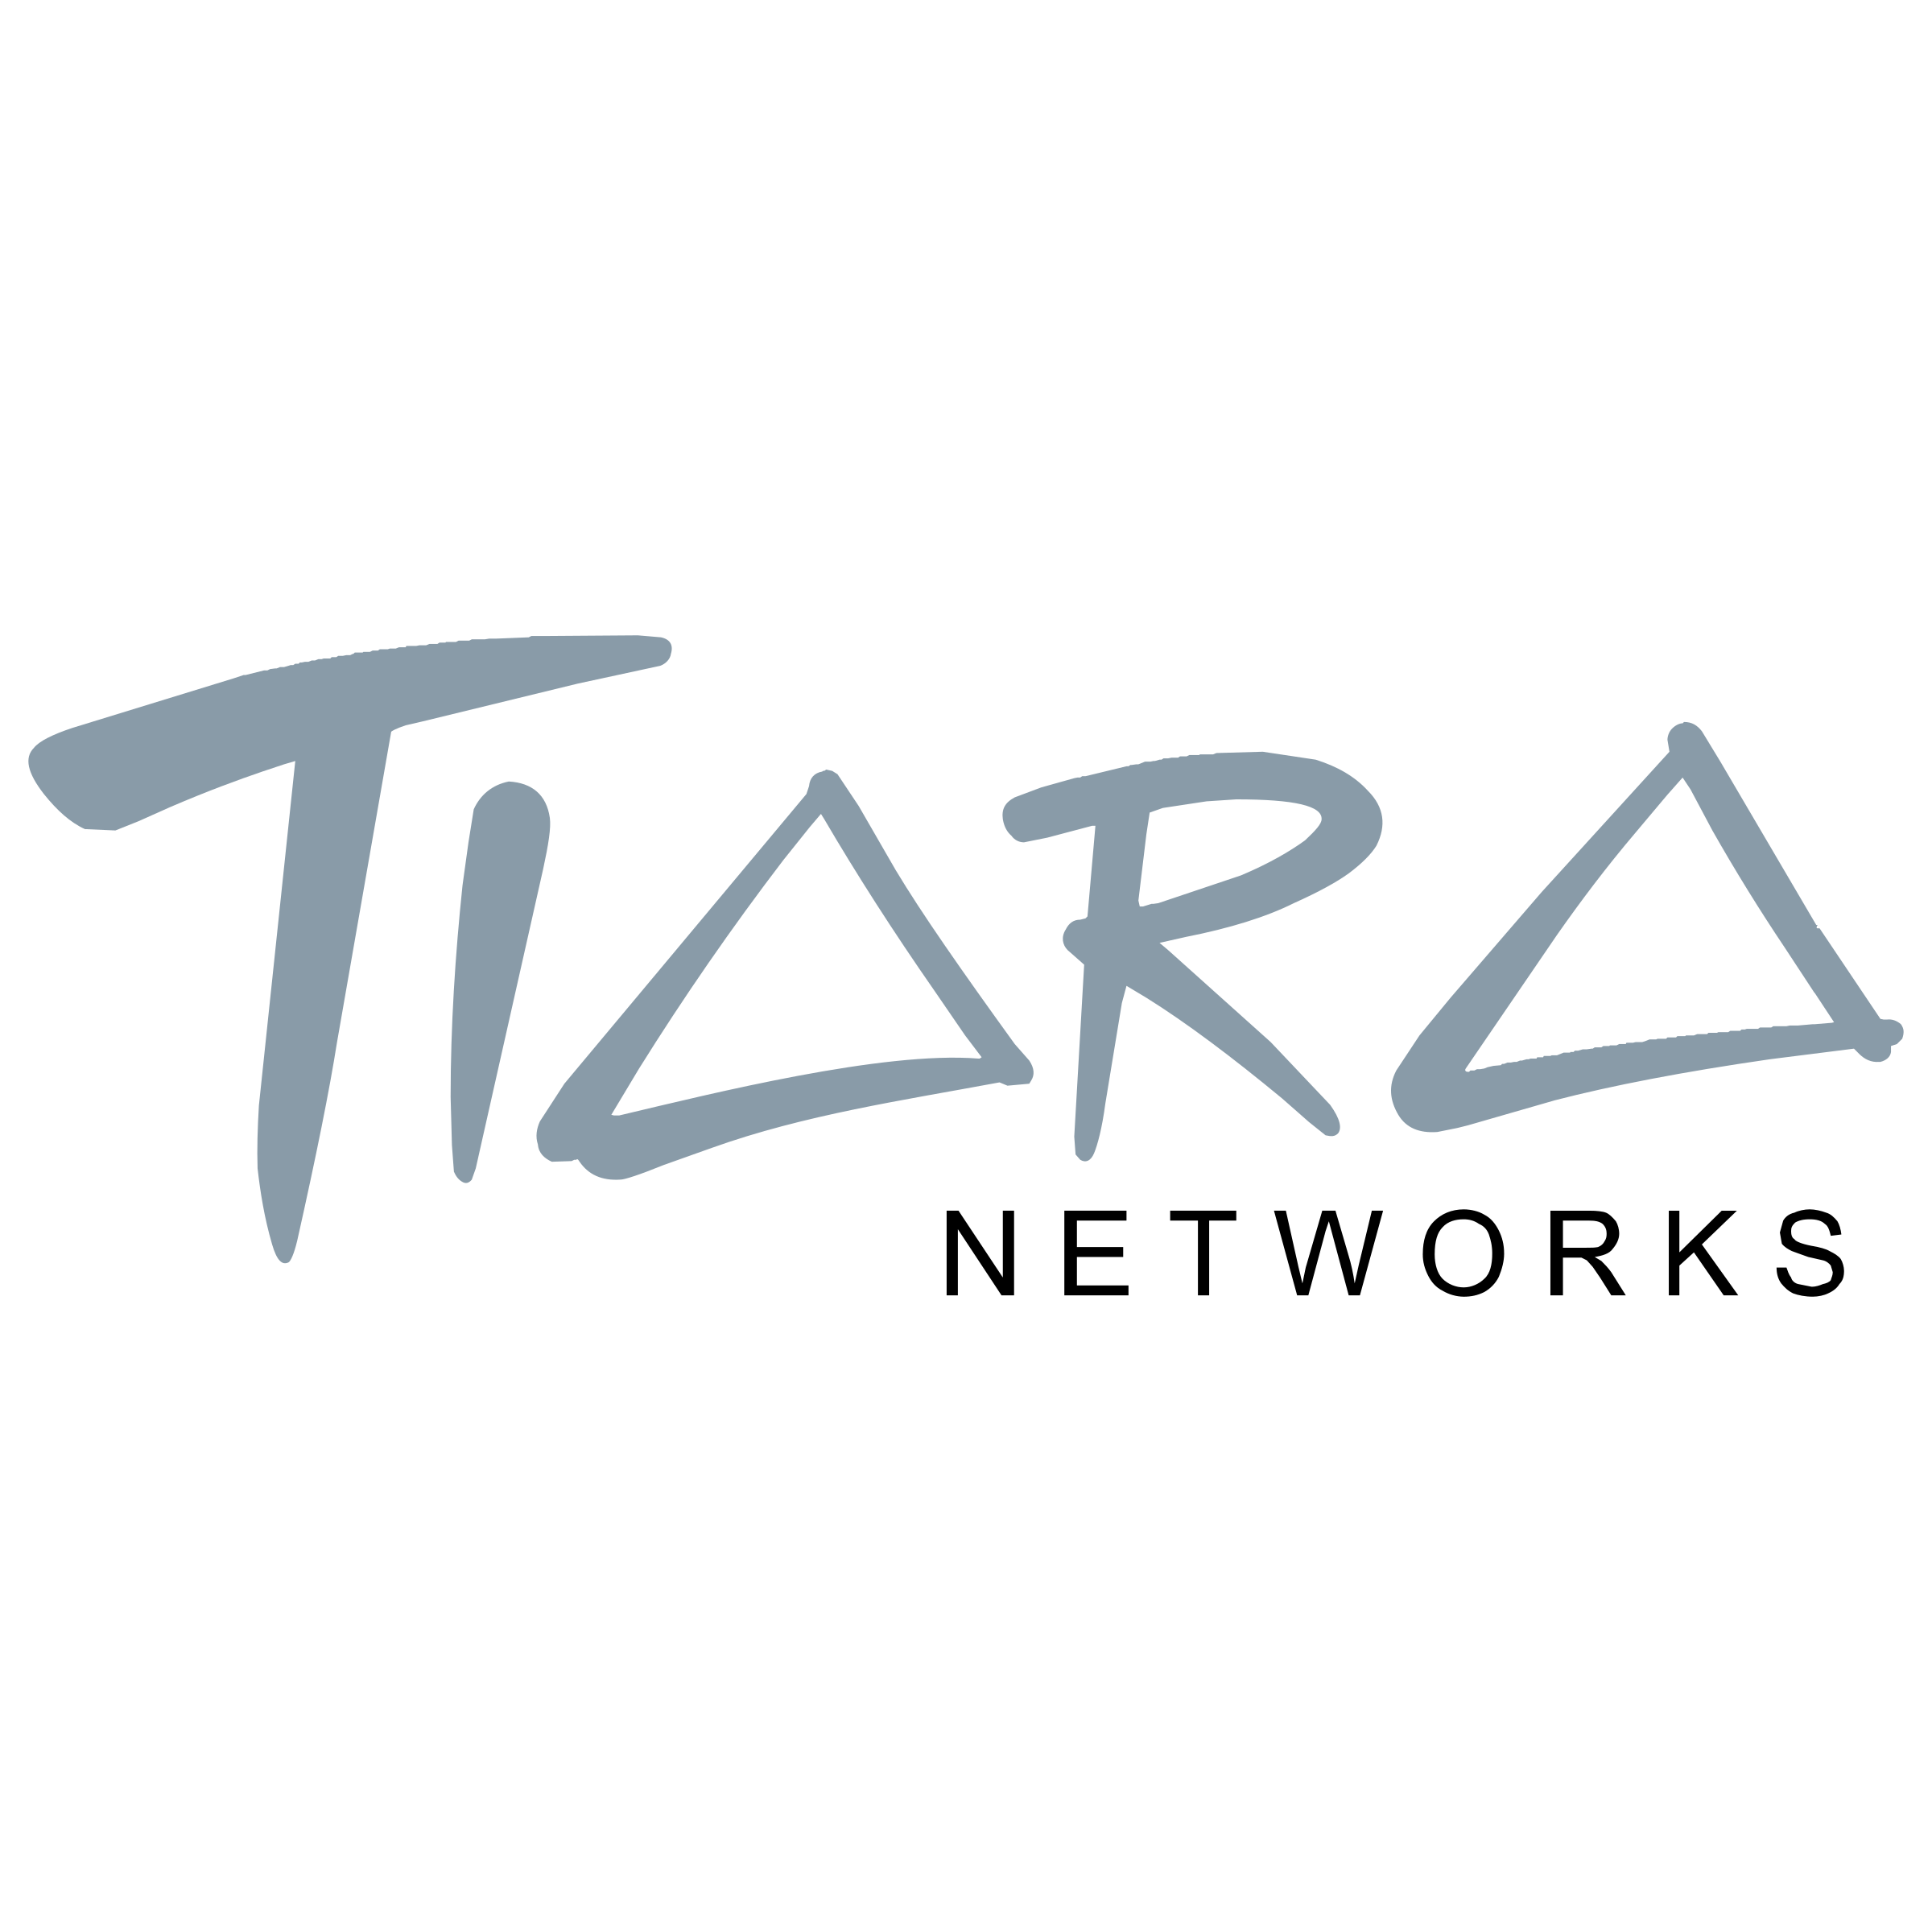 Tiara Logo - Tiara Logo PNG Transparent & SVG Vector - Freebie Supply